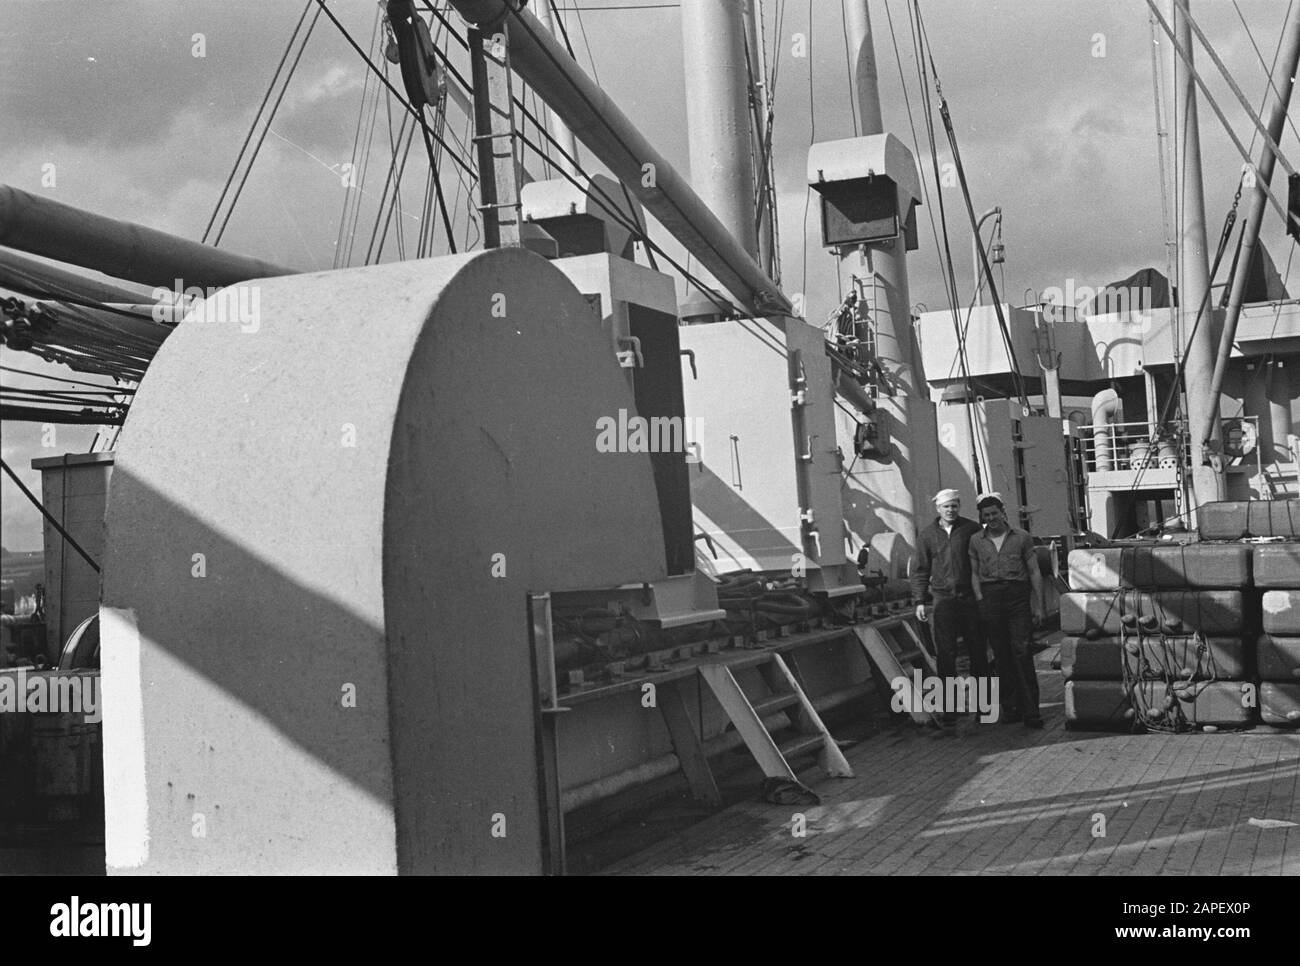 MN [Merchant Navy]/Anefo London series Description: Caption: Unloading food for Brittain. A Dutch cargoboat Date: 10 May 1943 Location: Great Britain Keywords: crew, merchant fleets, cargoes, navy, ships, World War II Stock Photo